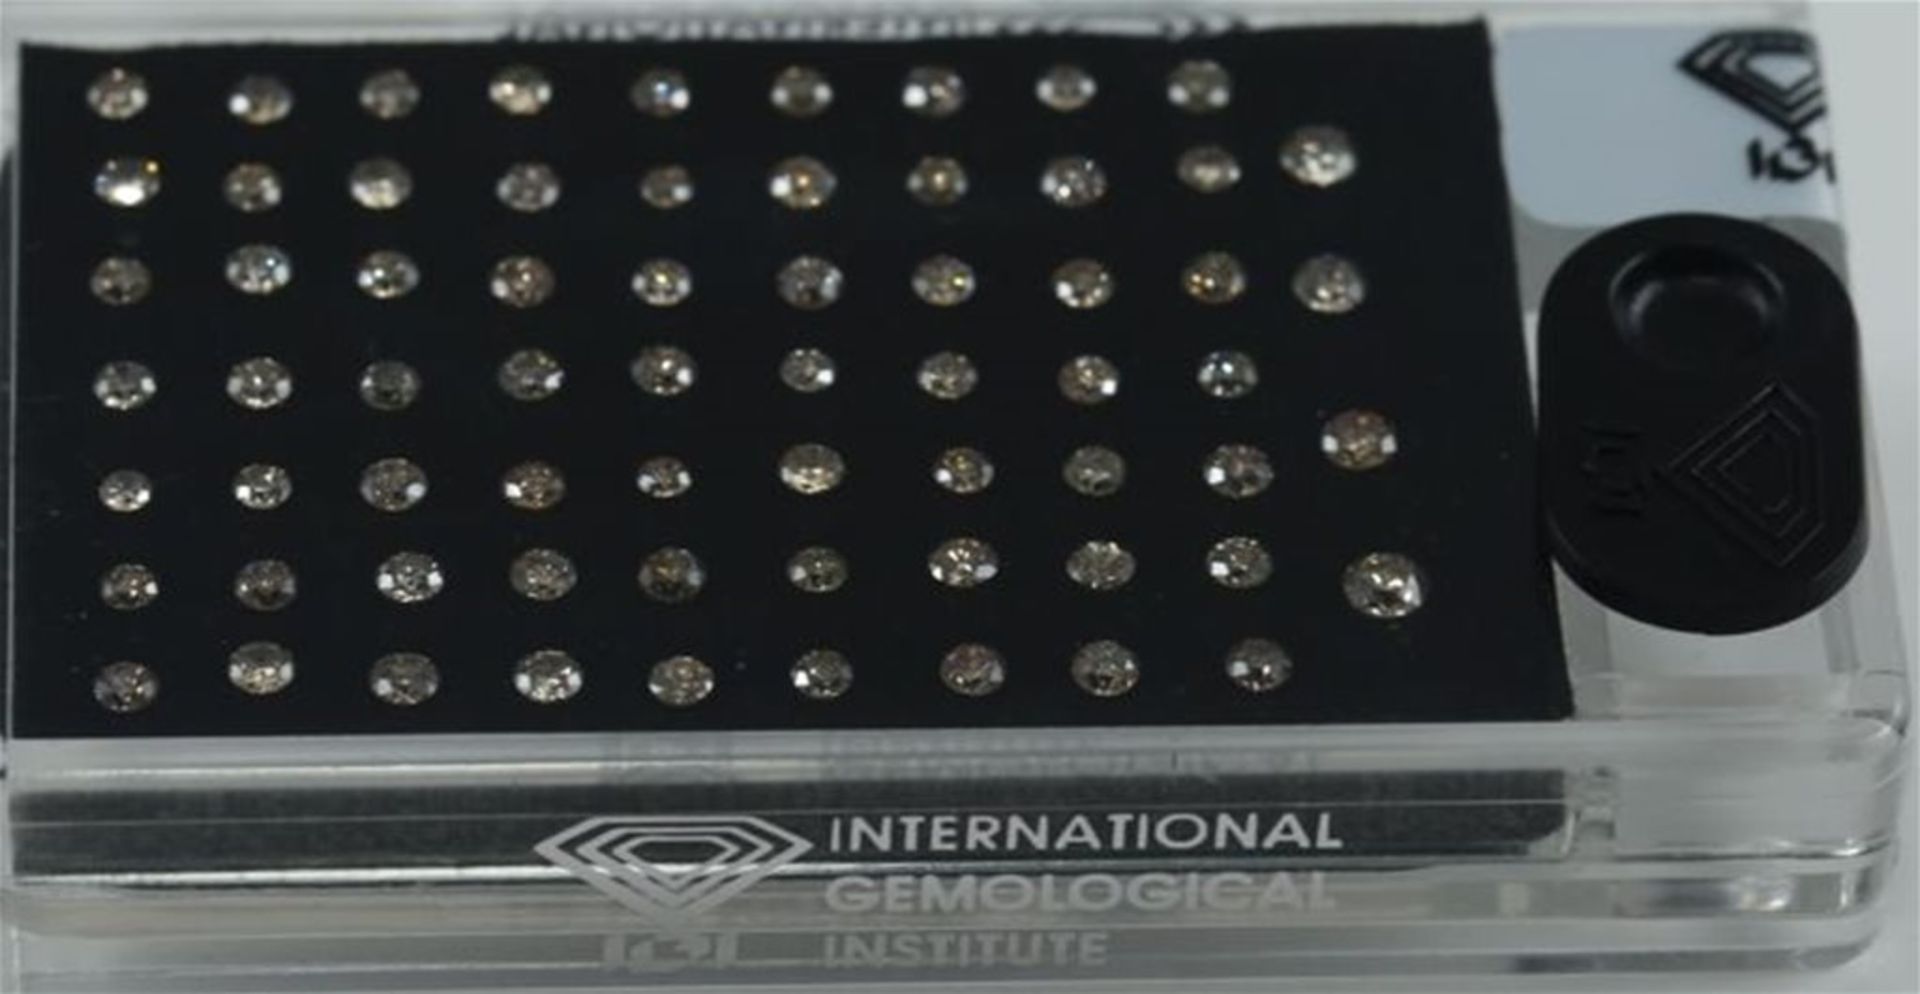 IGI Certified Sealed 3.08 ct. Diamond “D-Box” UNTREATED - Image 3 of 4